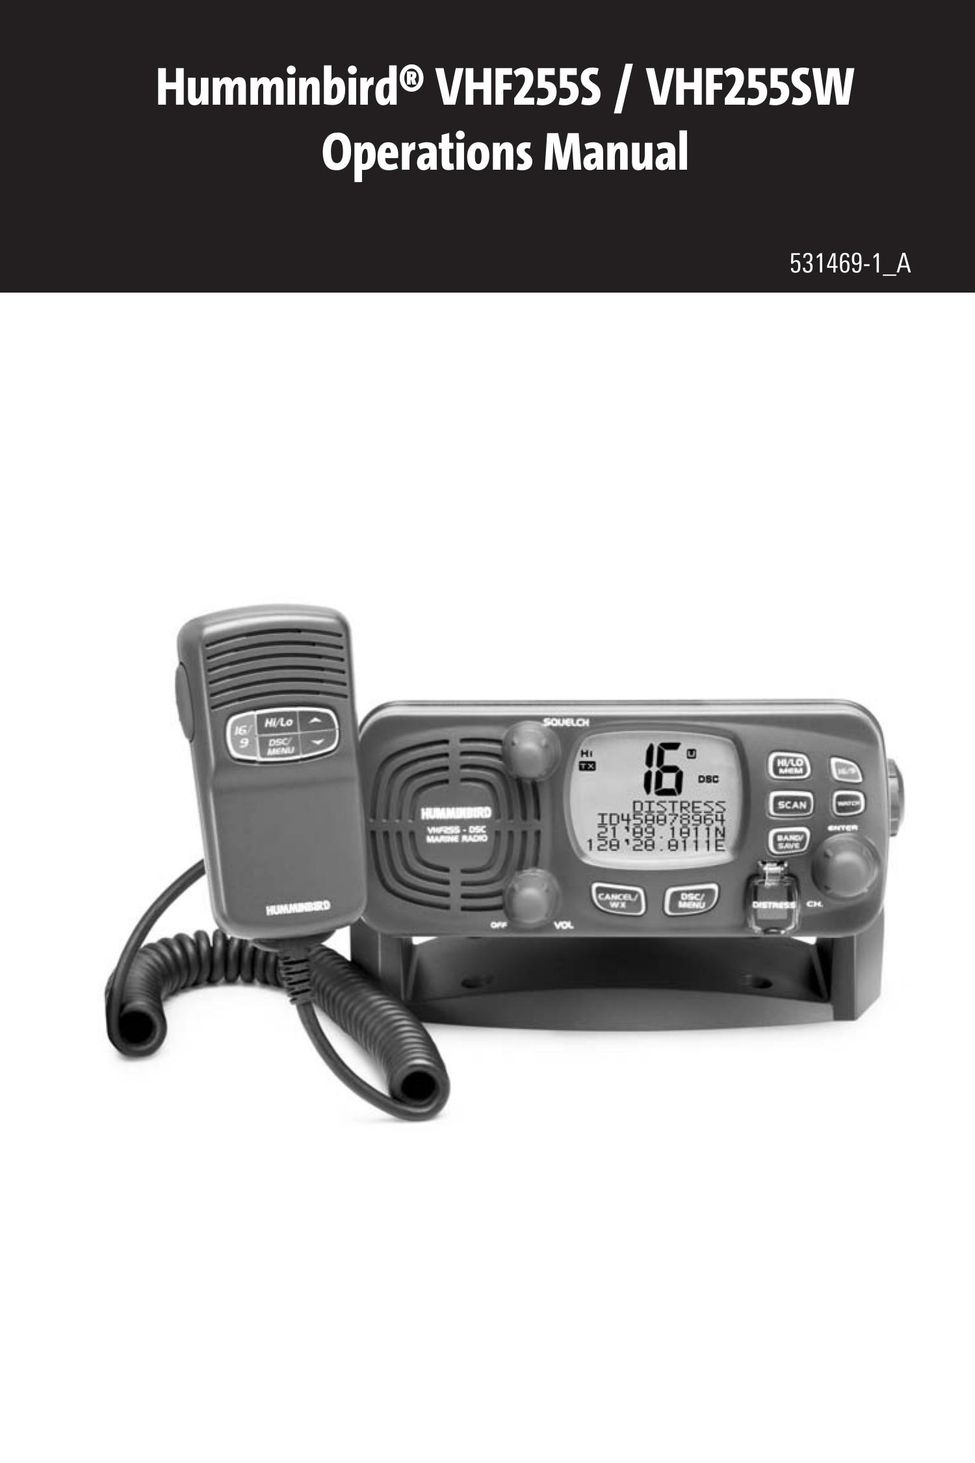 Humminbird VHF255SW Two-Way Radio User Manual